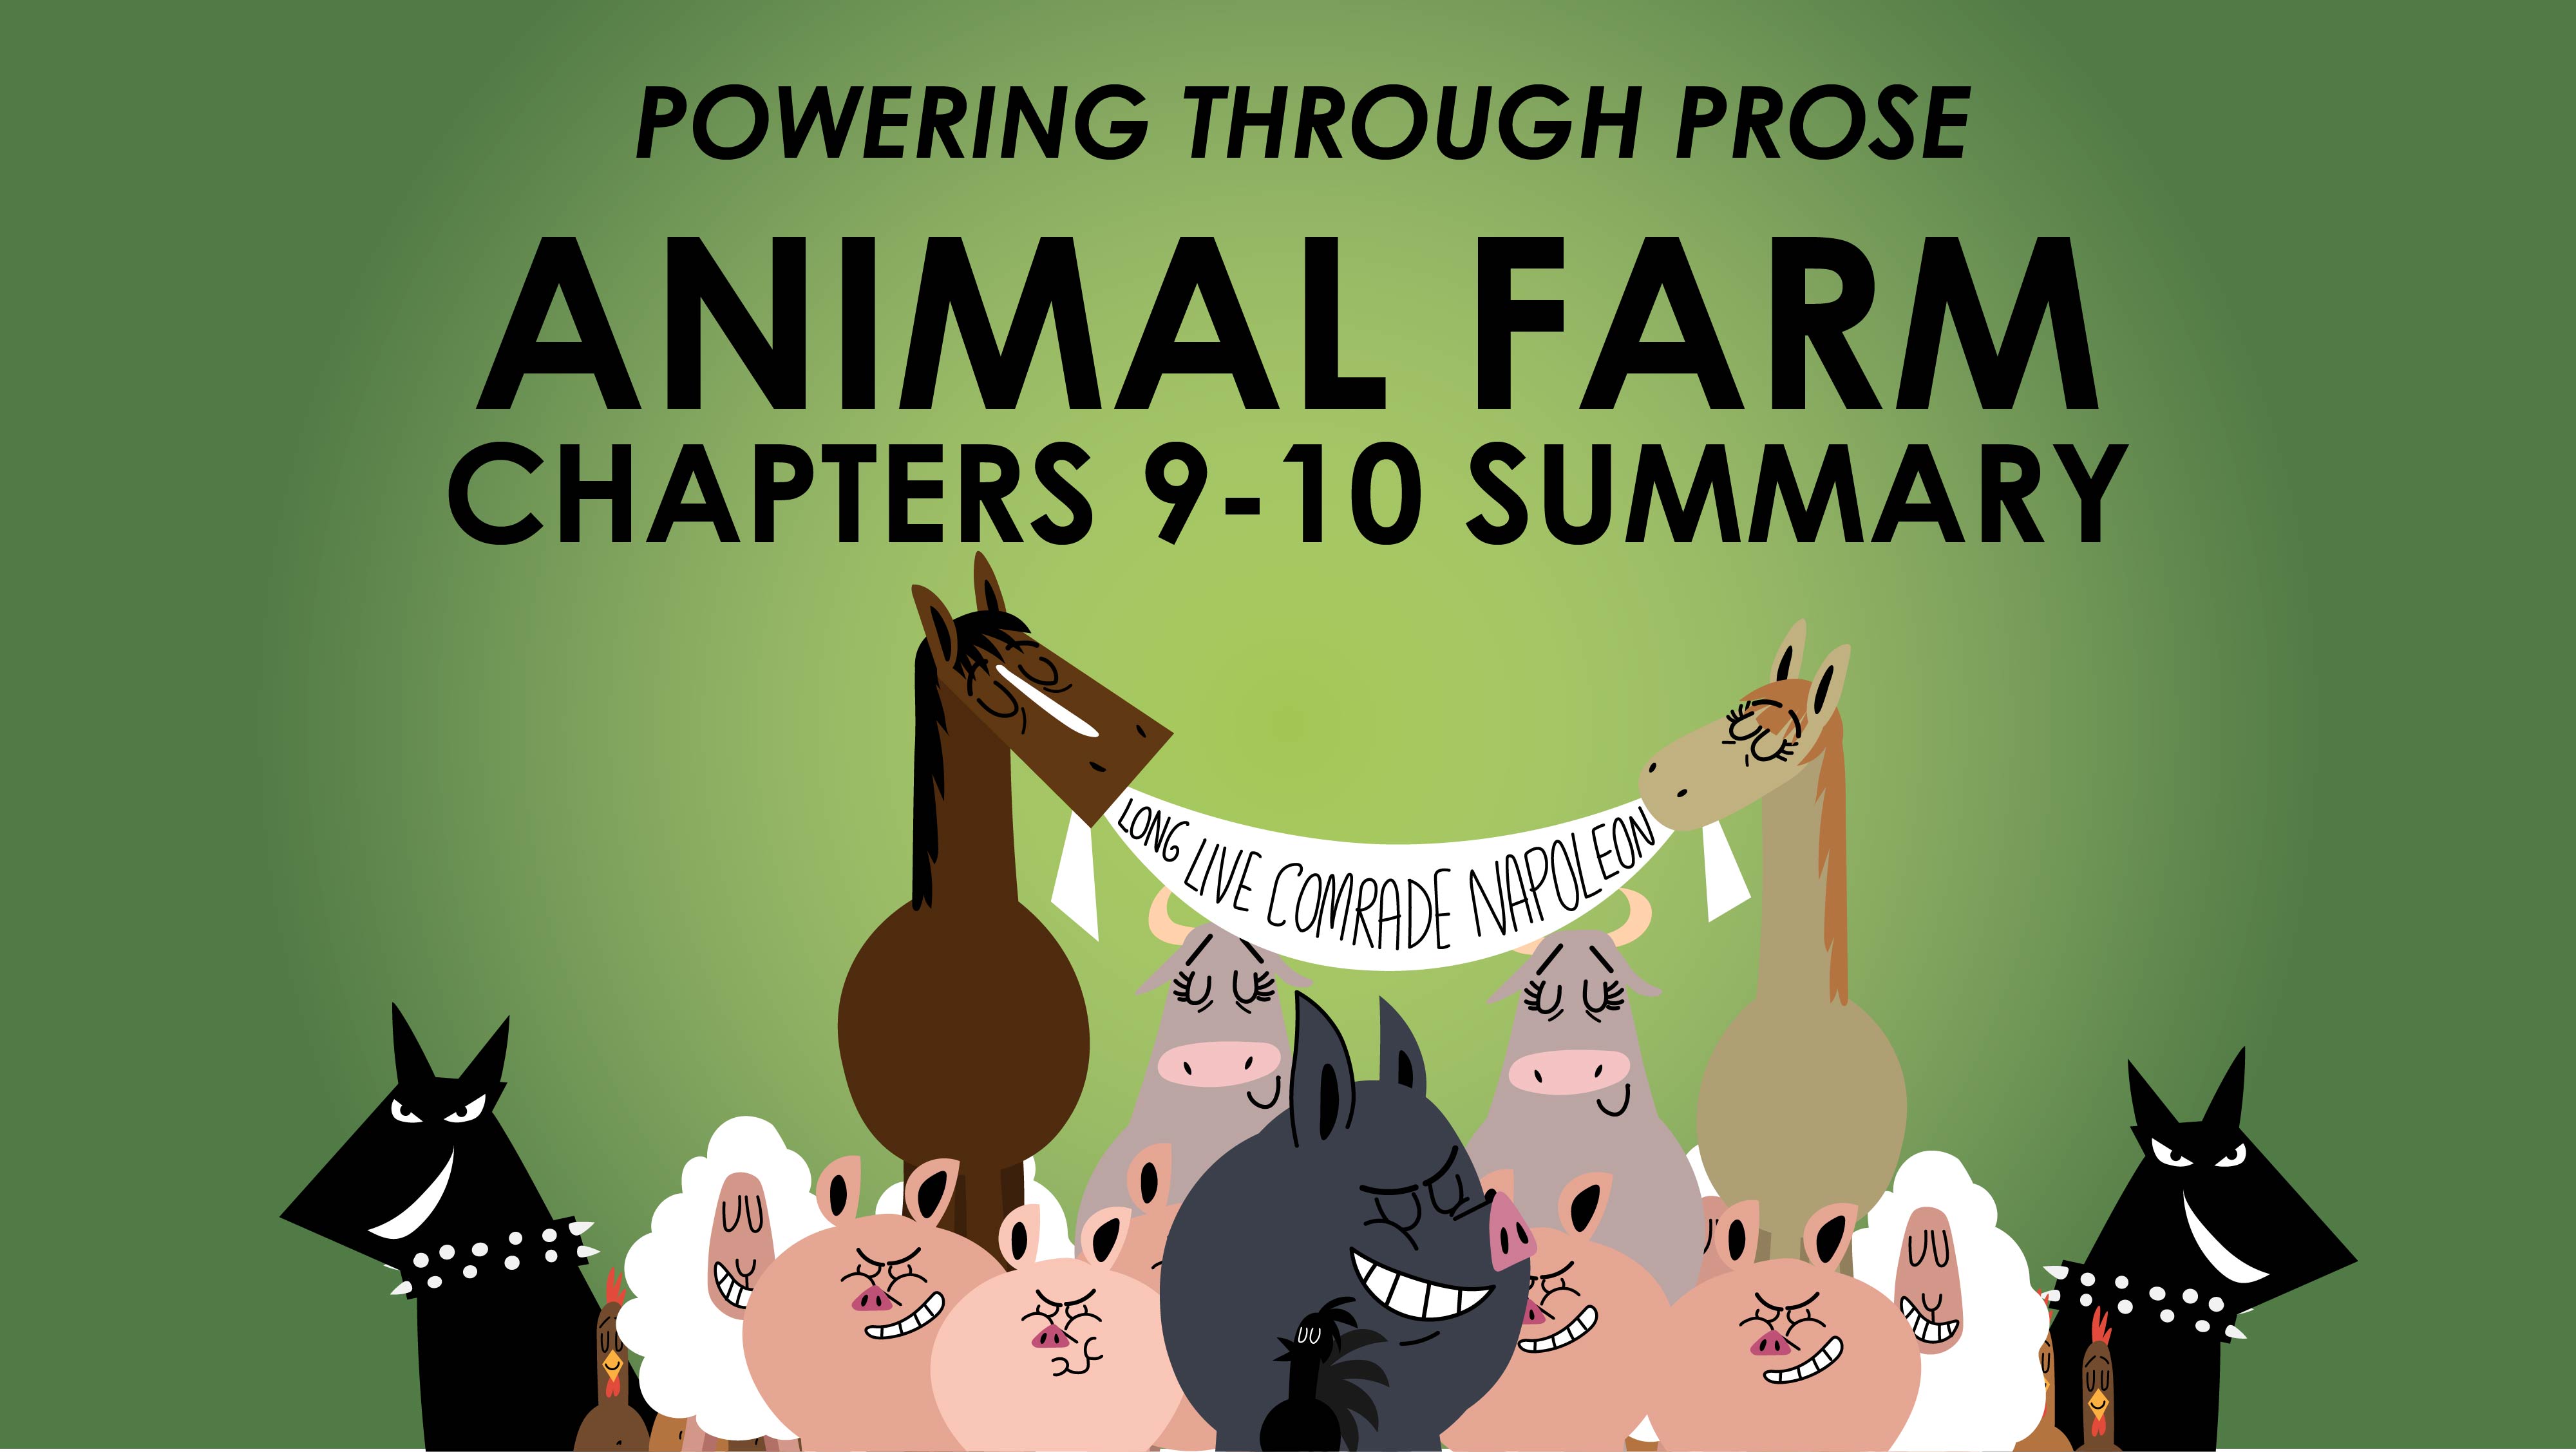 Animal Farm - George Orwell - Chapters 9-10 Summary - Powering Through Prose Series